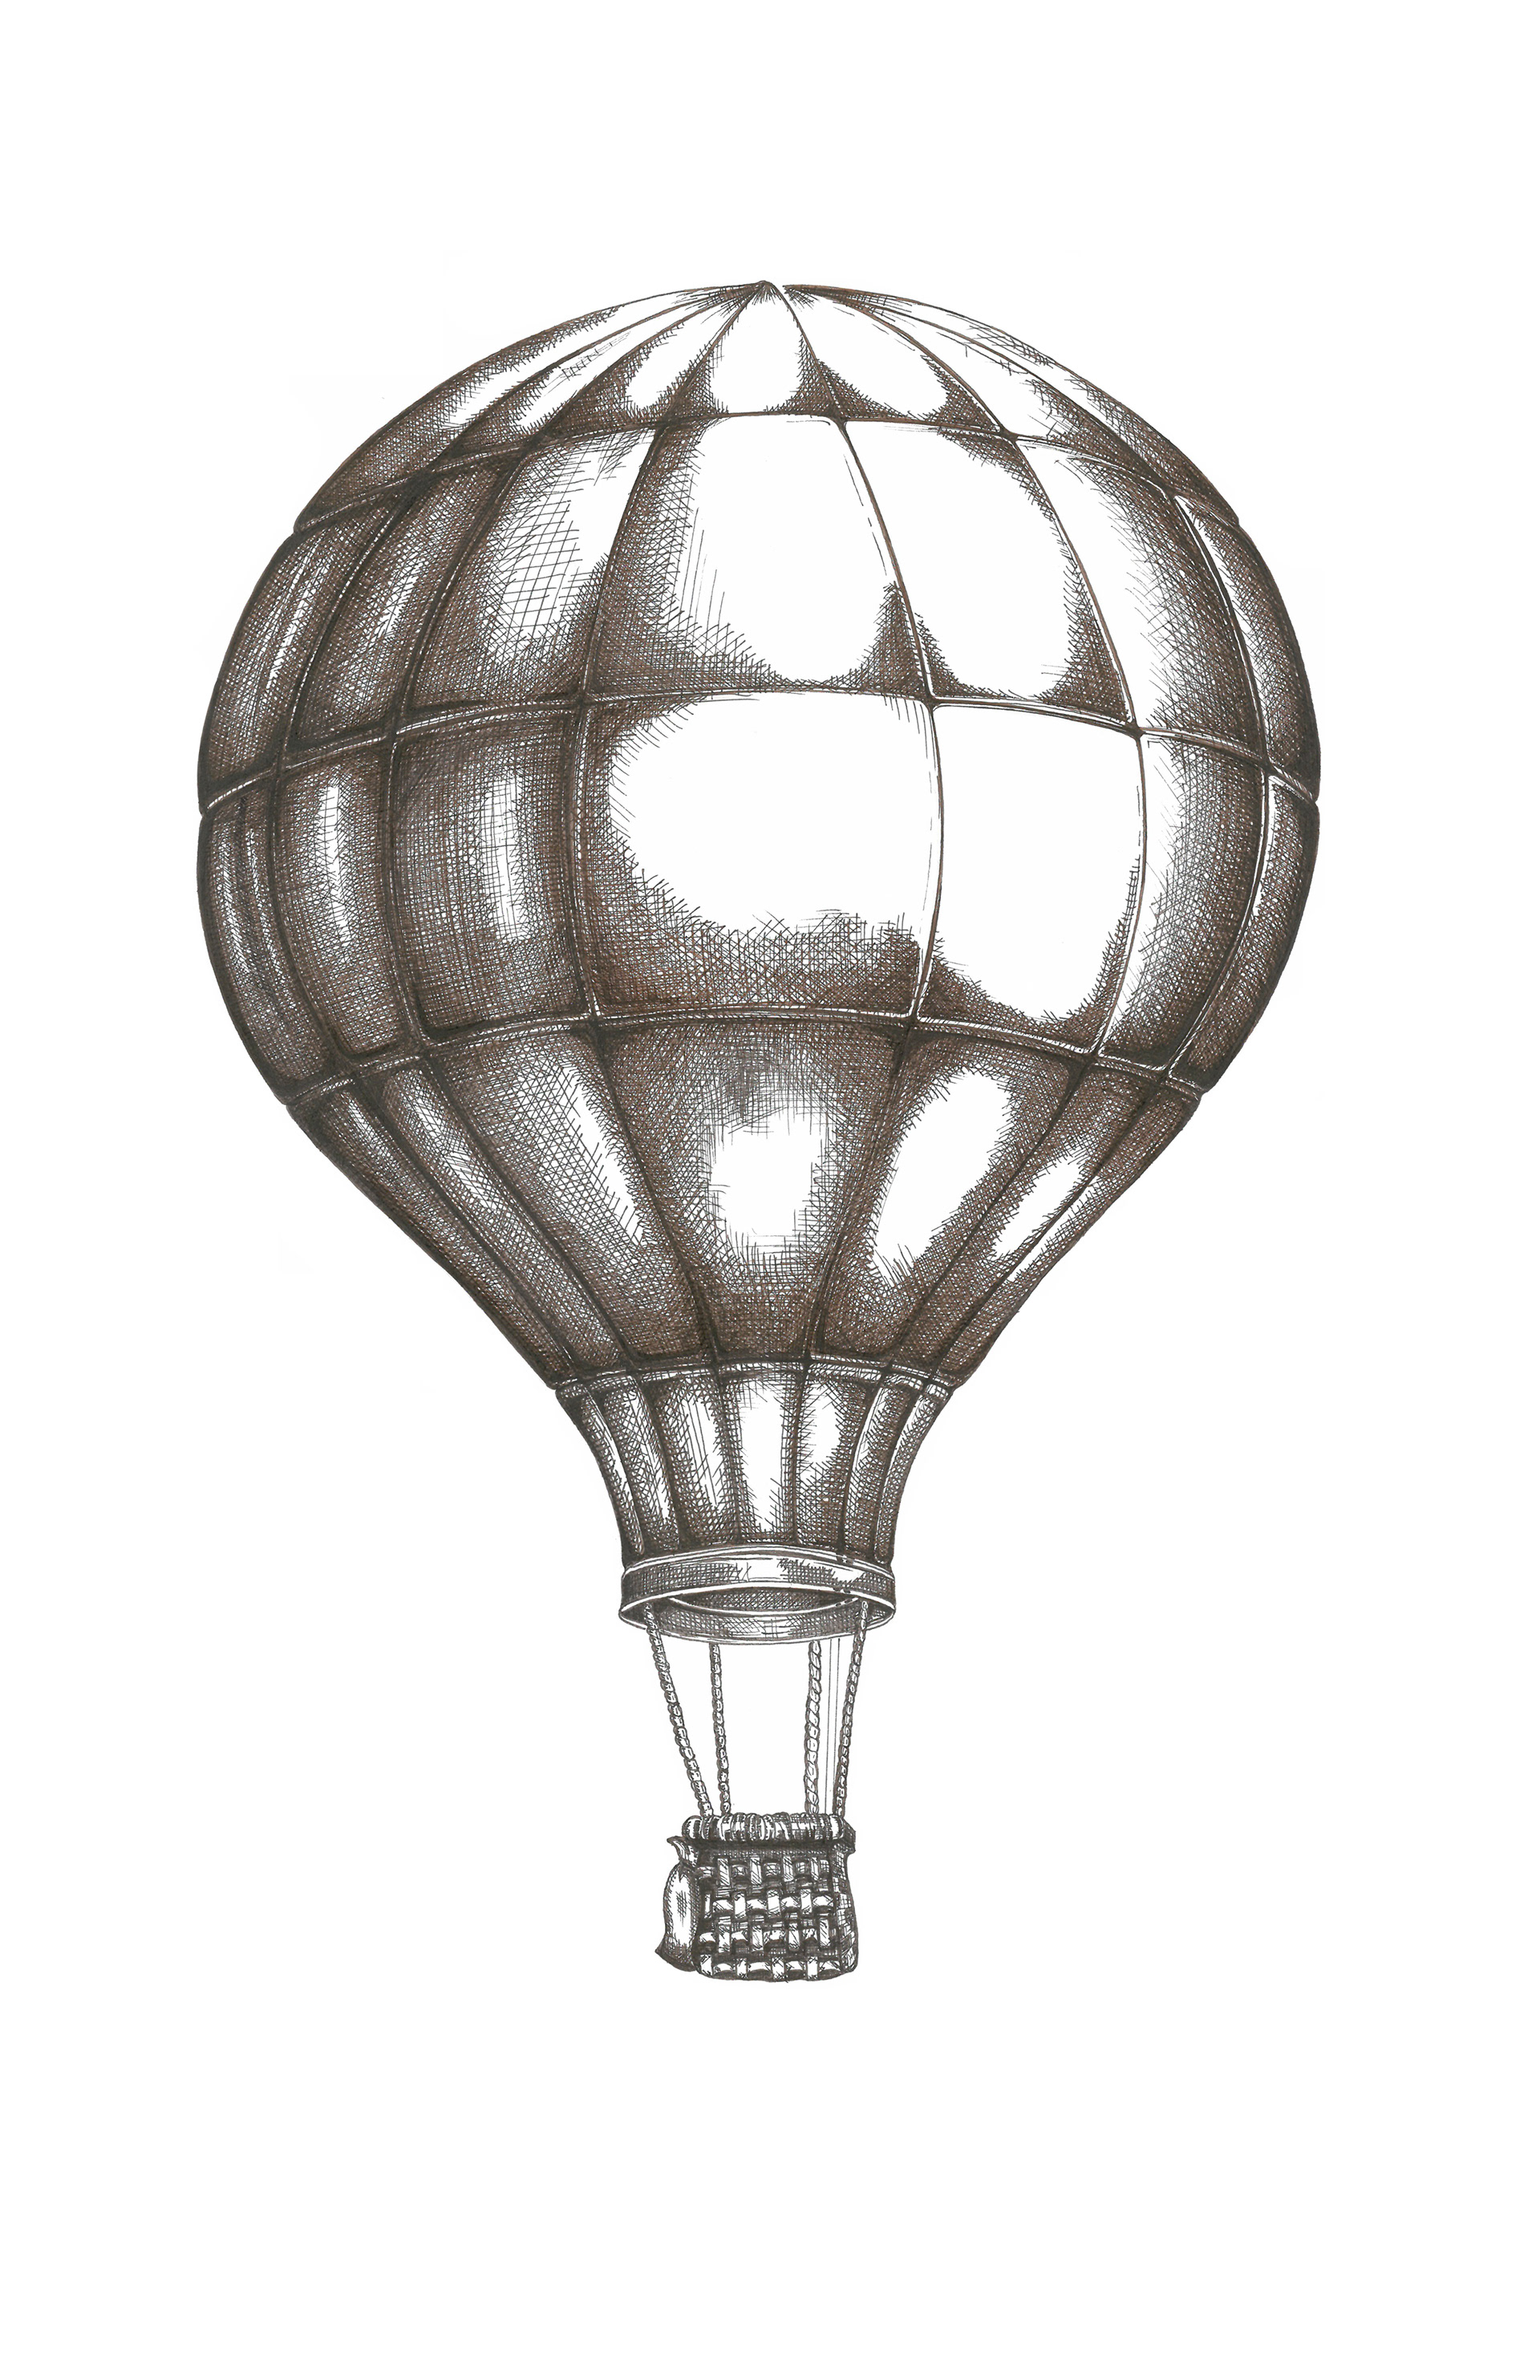 Balloon Drawing Artistic Sketching